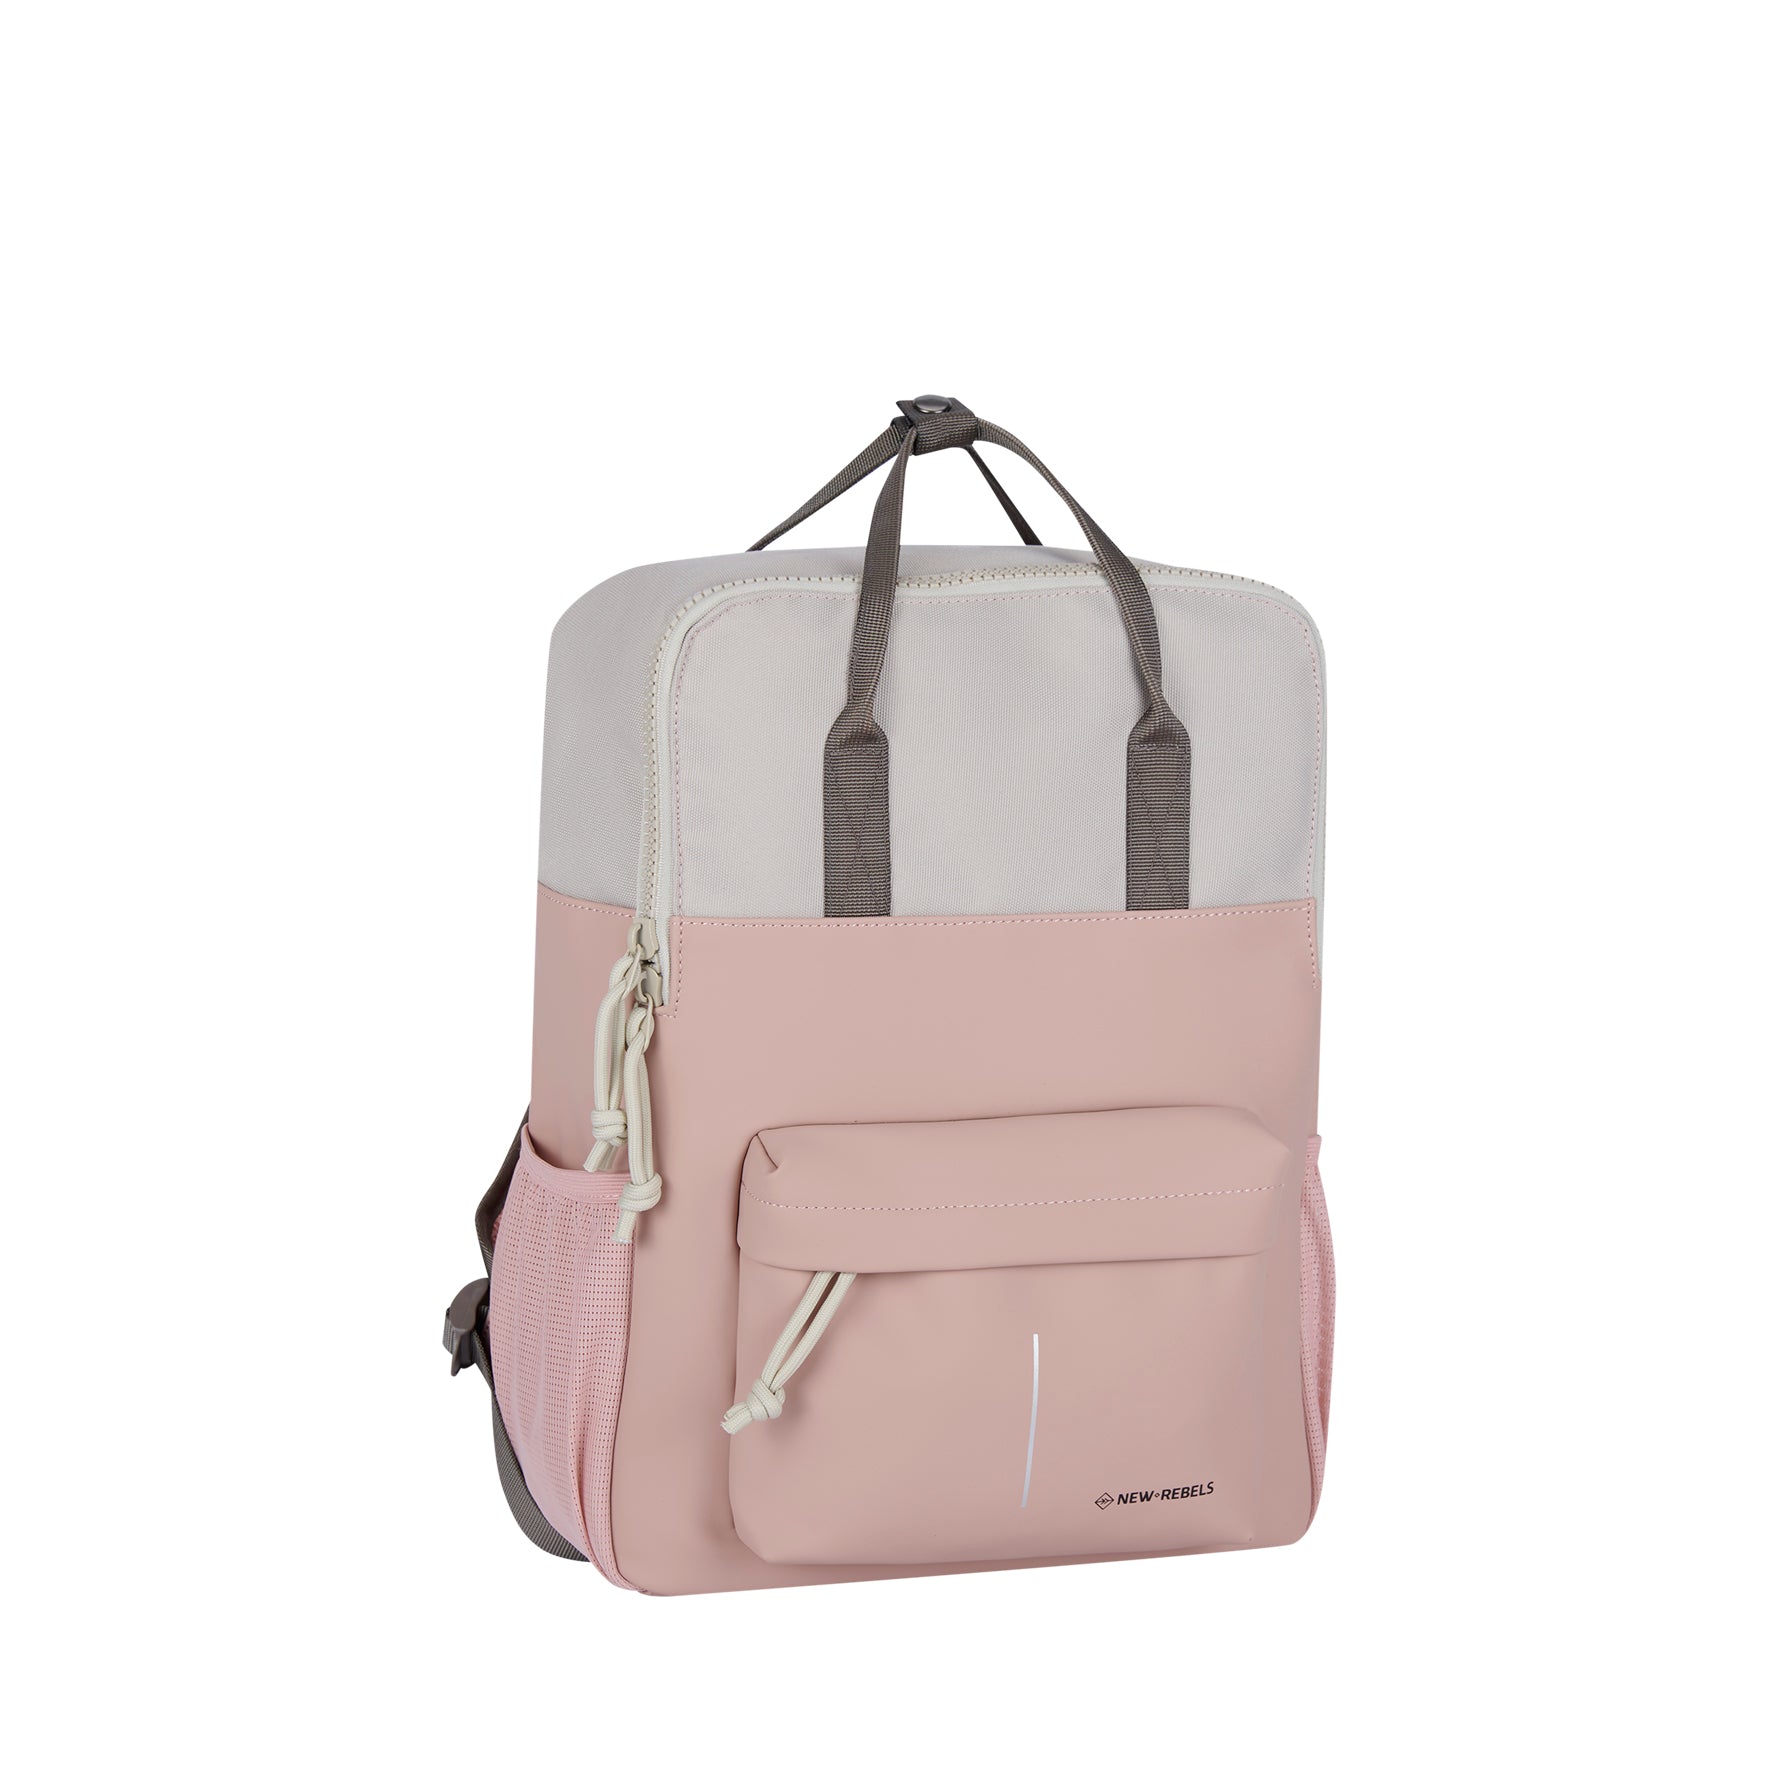 Backpack 'Springfield' old pink/beige